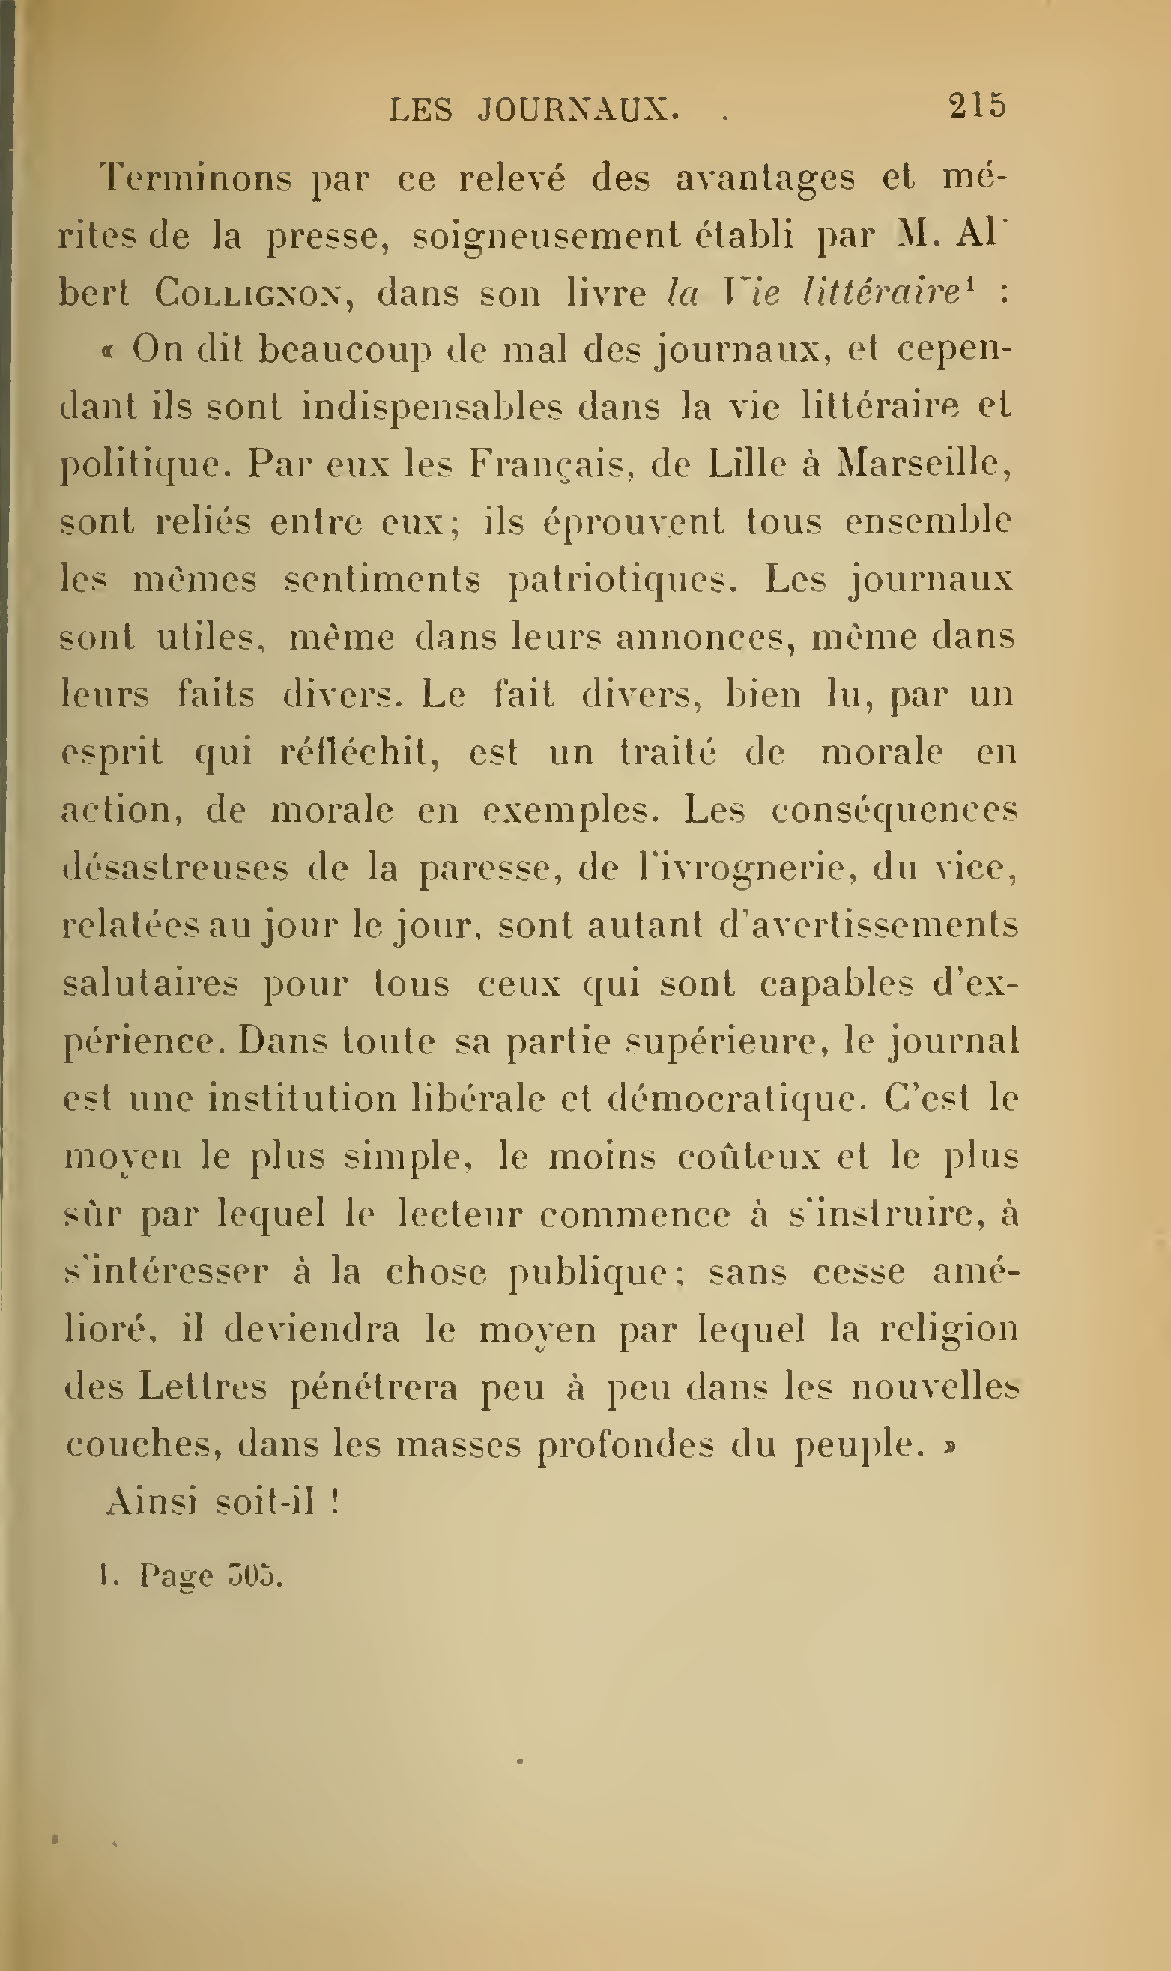 Albert Cim, Le Livre, t. II, p. 215.